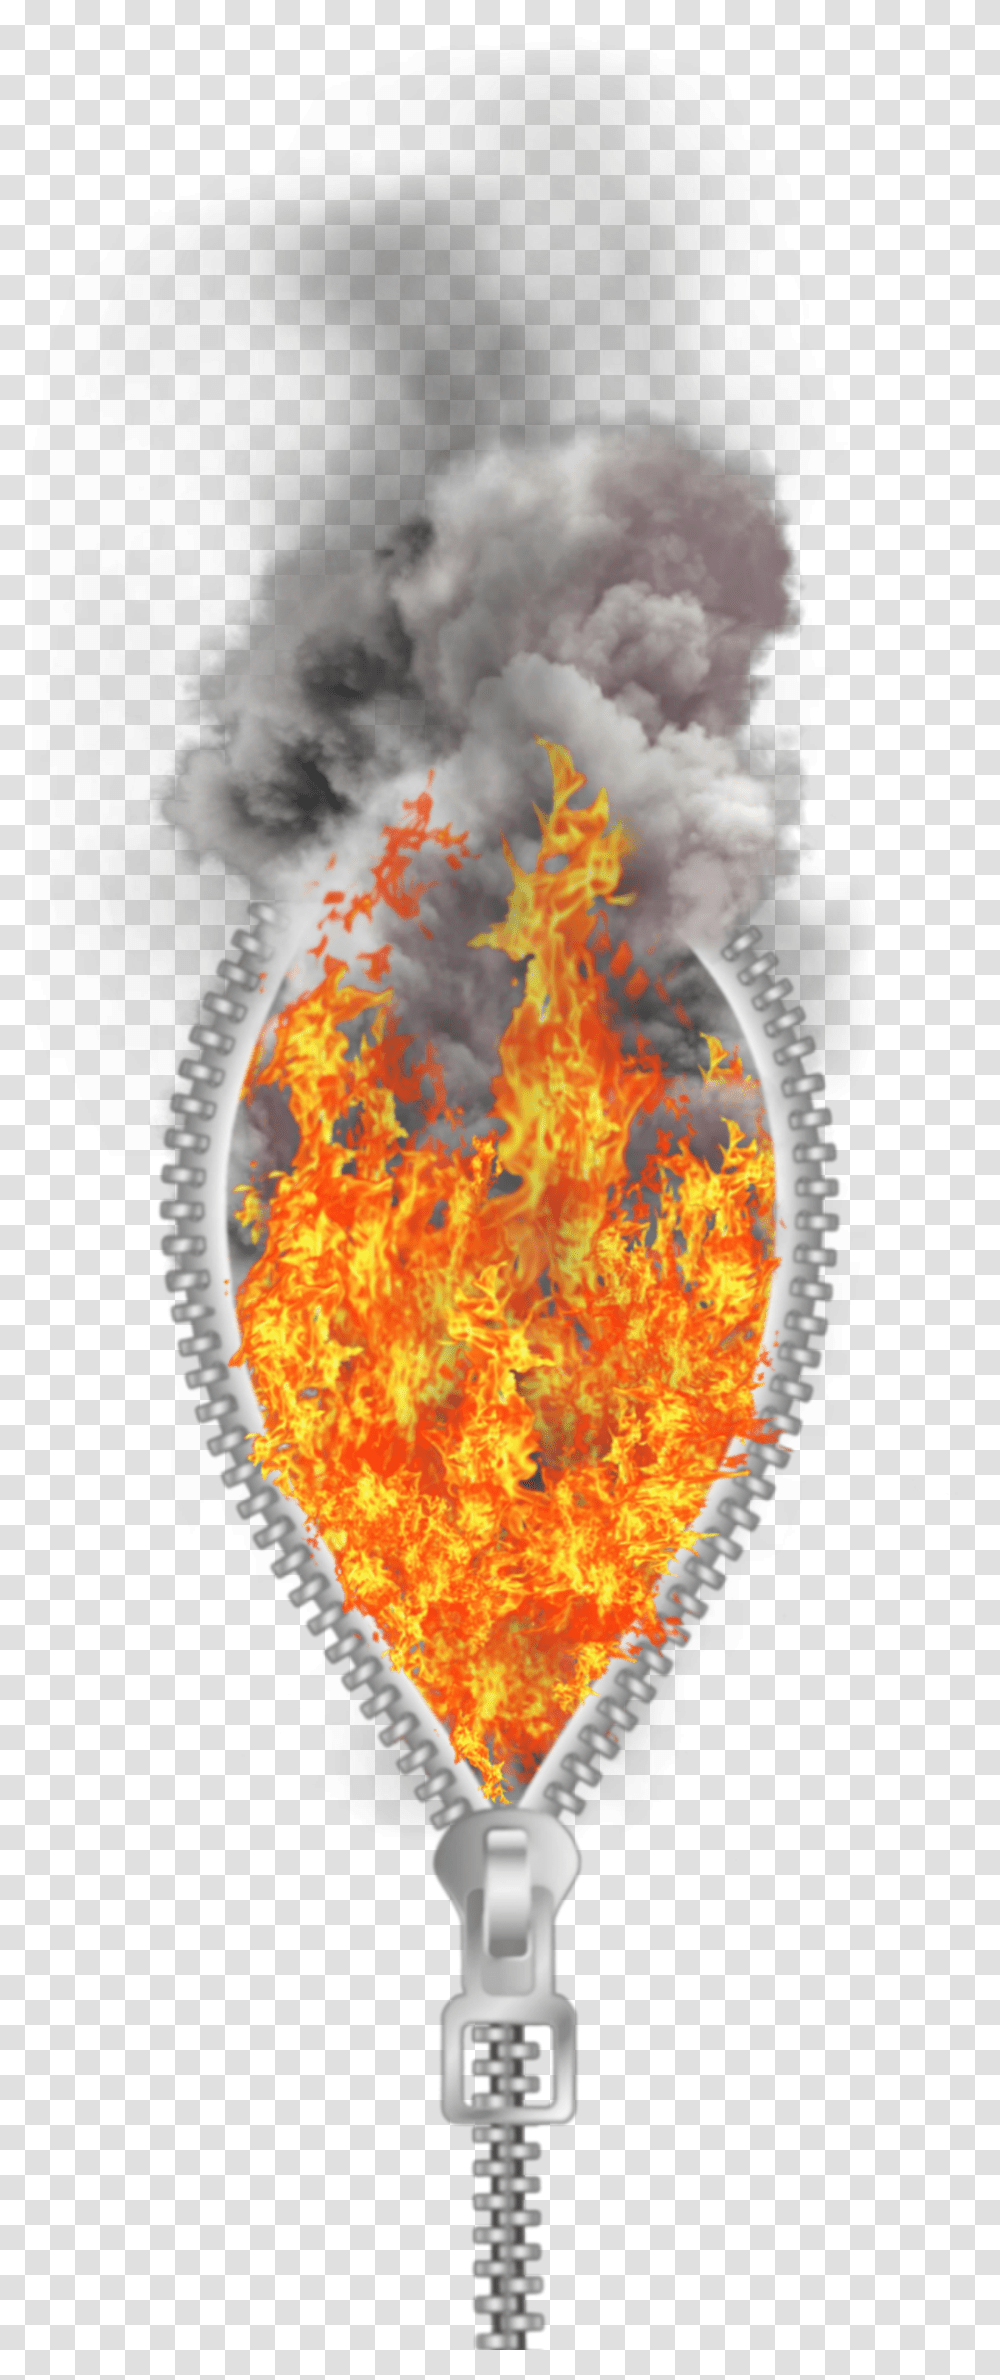 Zipper Fire Burning Flames Smoke Alienart Alienized Illustration, Nature, Outdoors, Pineapple, Fruit Transparent Png